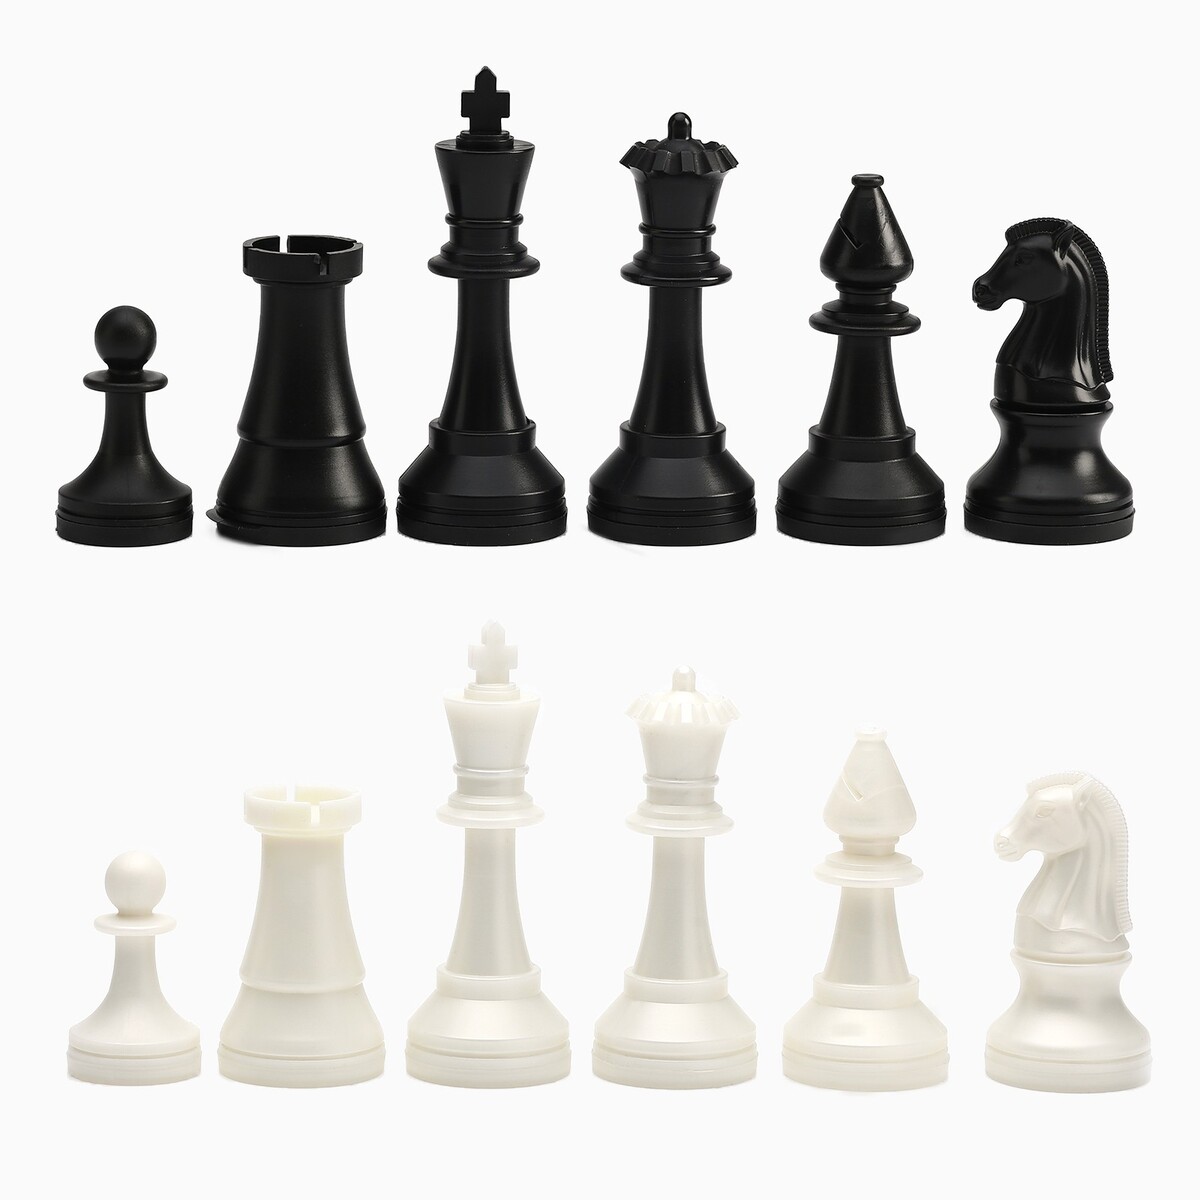 Шахматные фигуры турнирные, пластик, король h-10.5 см, пешка h-5 см шахматные фигуры обиходные король h 7 см пешка 4 см пластик